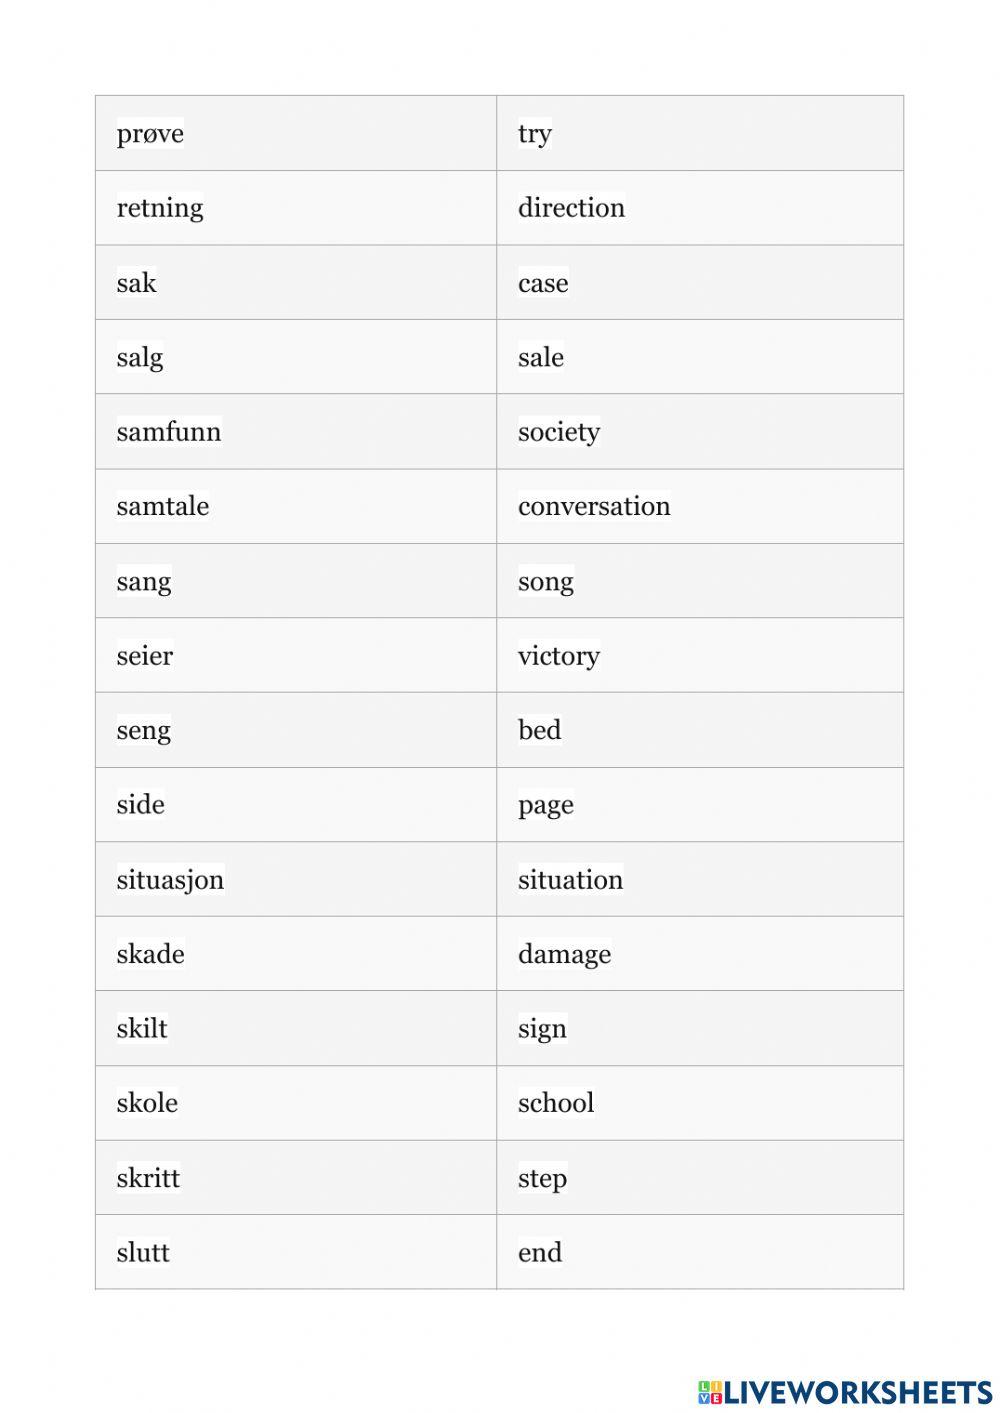 Useful nouns